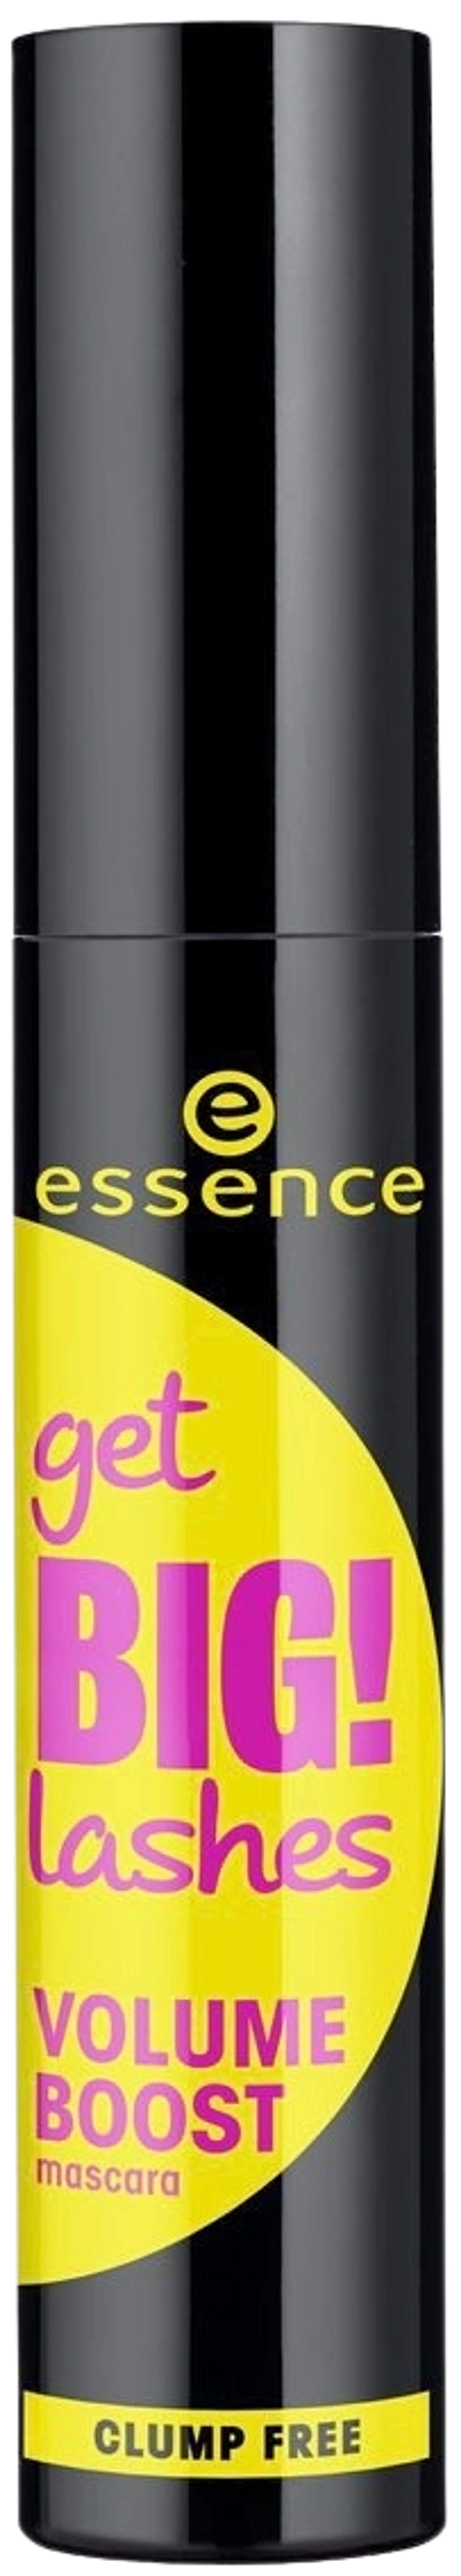 essence get BIG! lashes VOLUME BOOST mascara 12 ml - 2